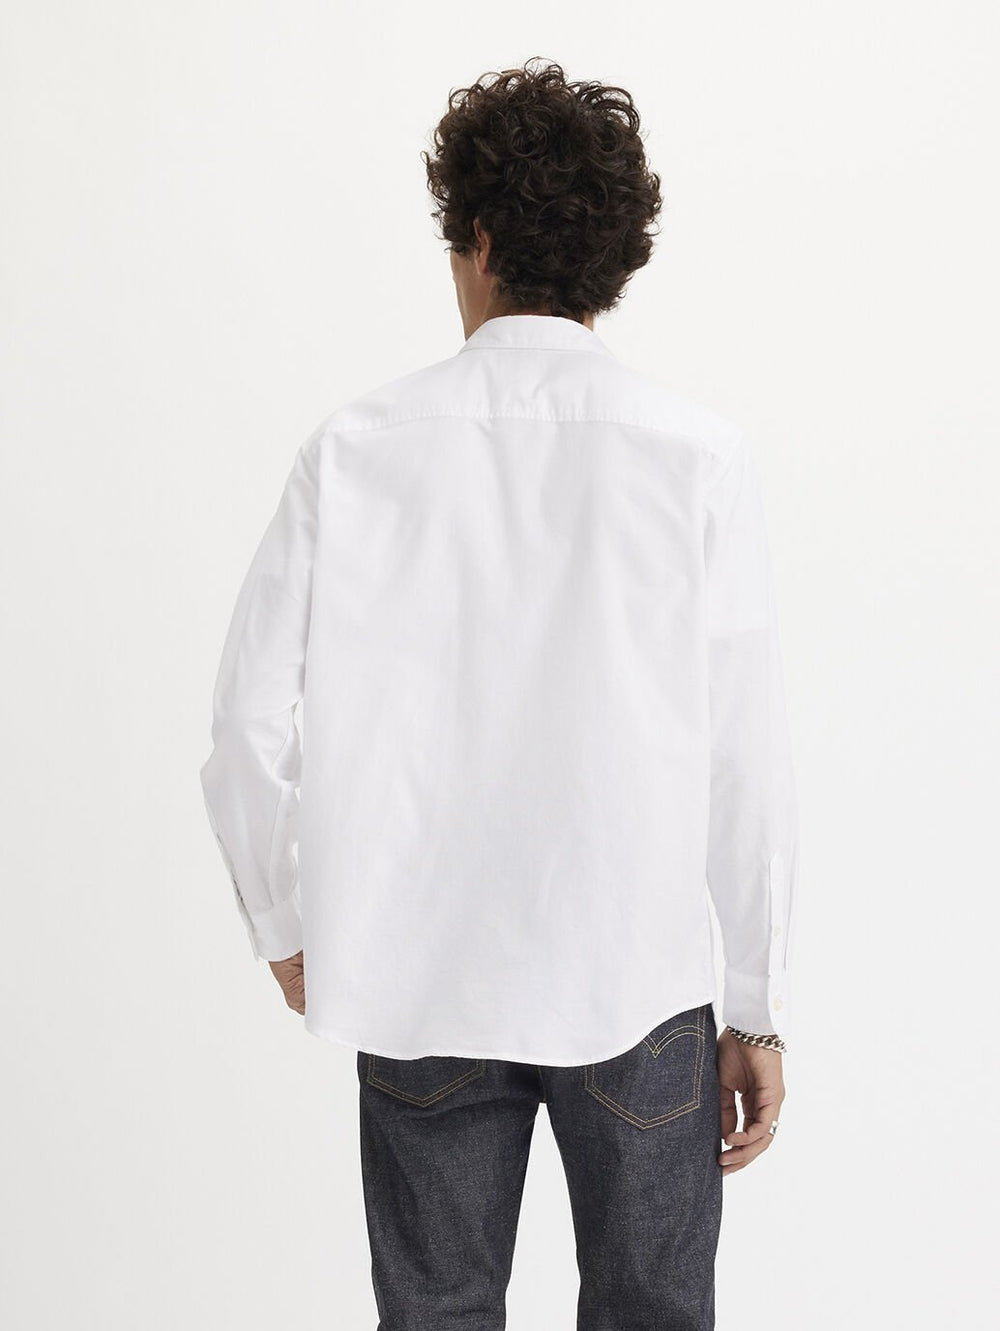 A72100000 Levi's Authentic Button Down L/S Shirt | Bright White